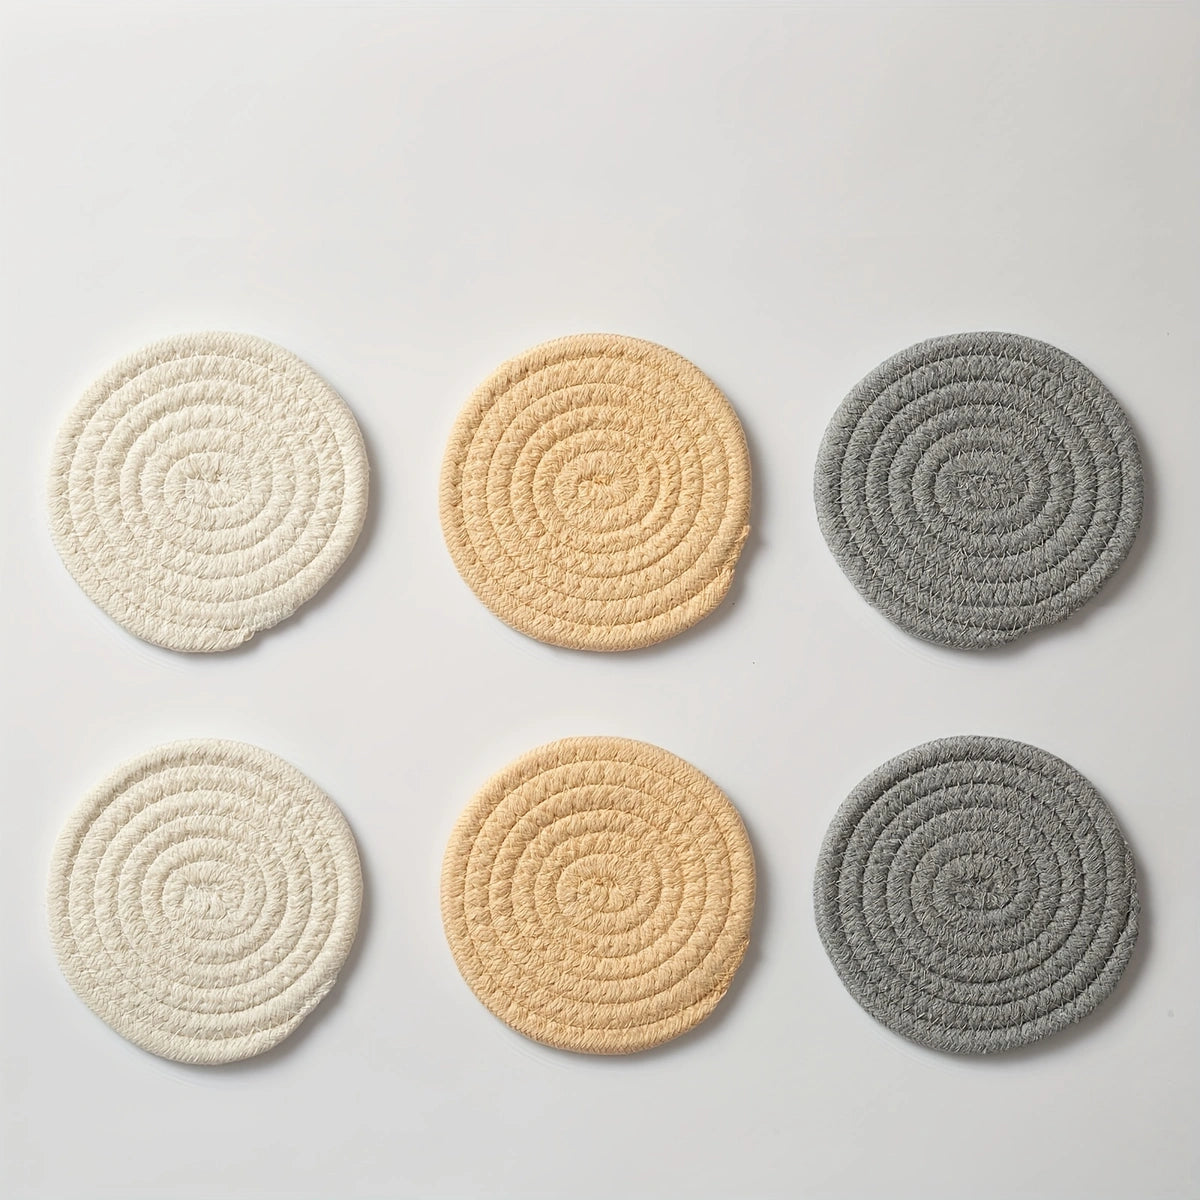 6 Handmade Woven Round Coasters